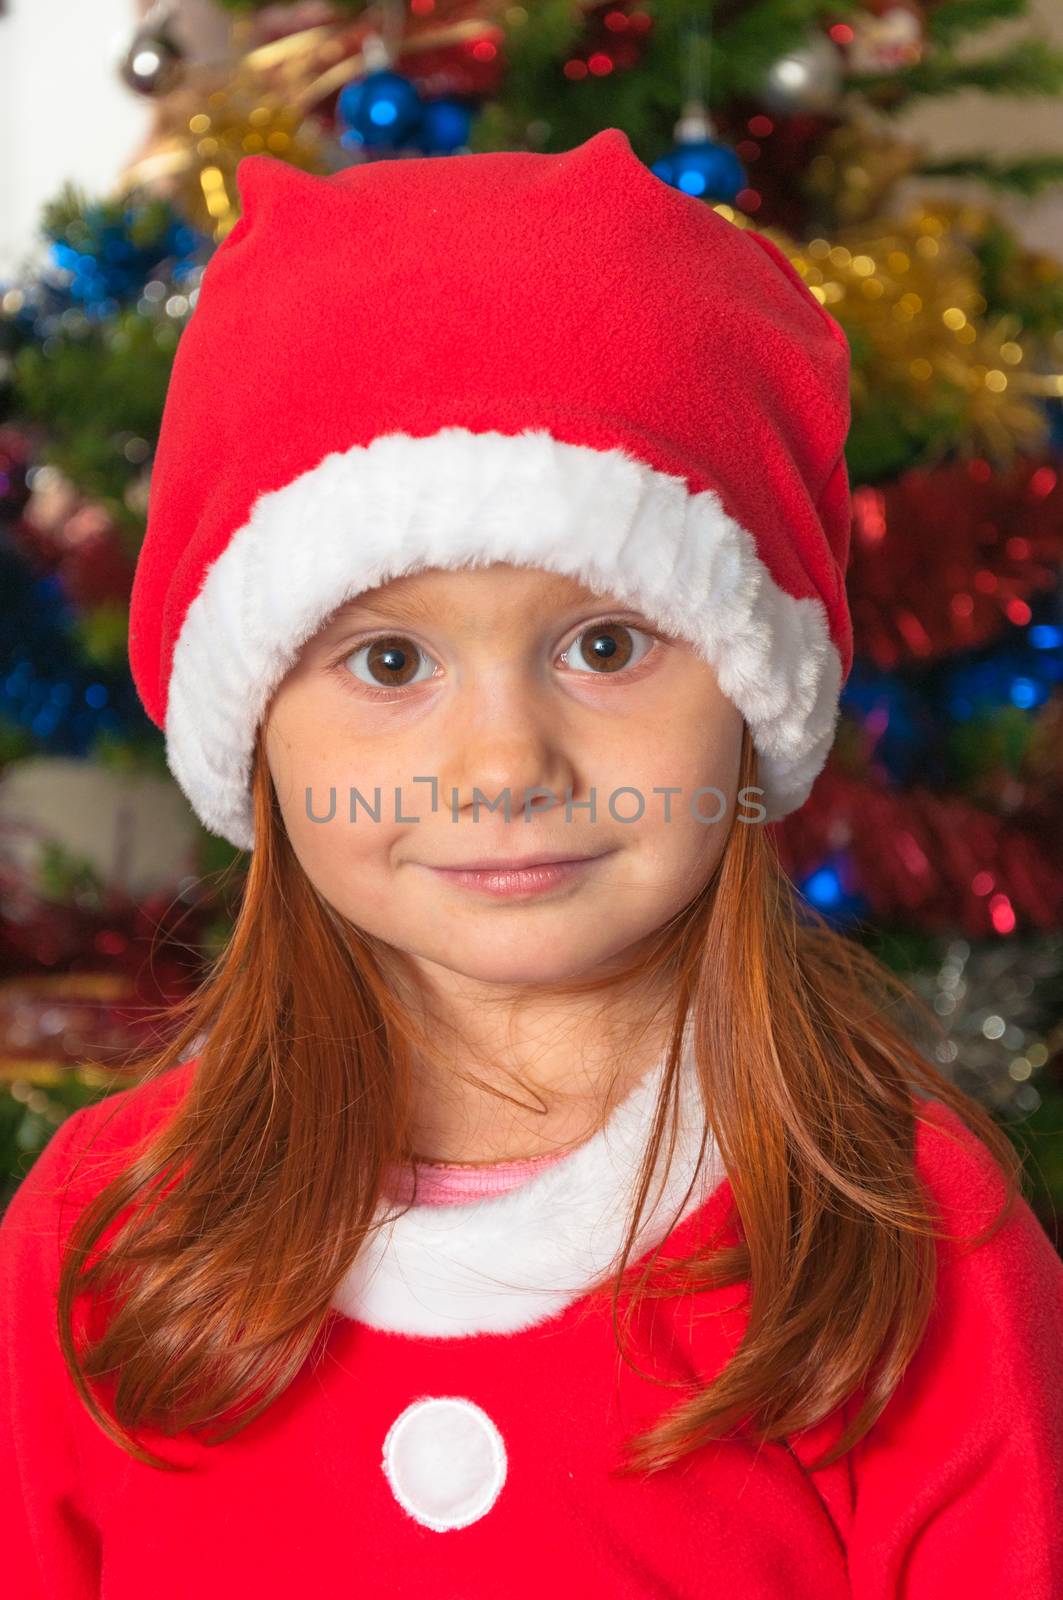 Little girl dressed as Santa Claus by easyclickshop